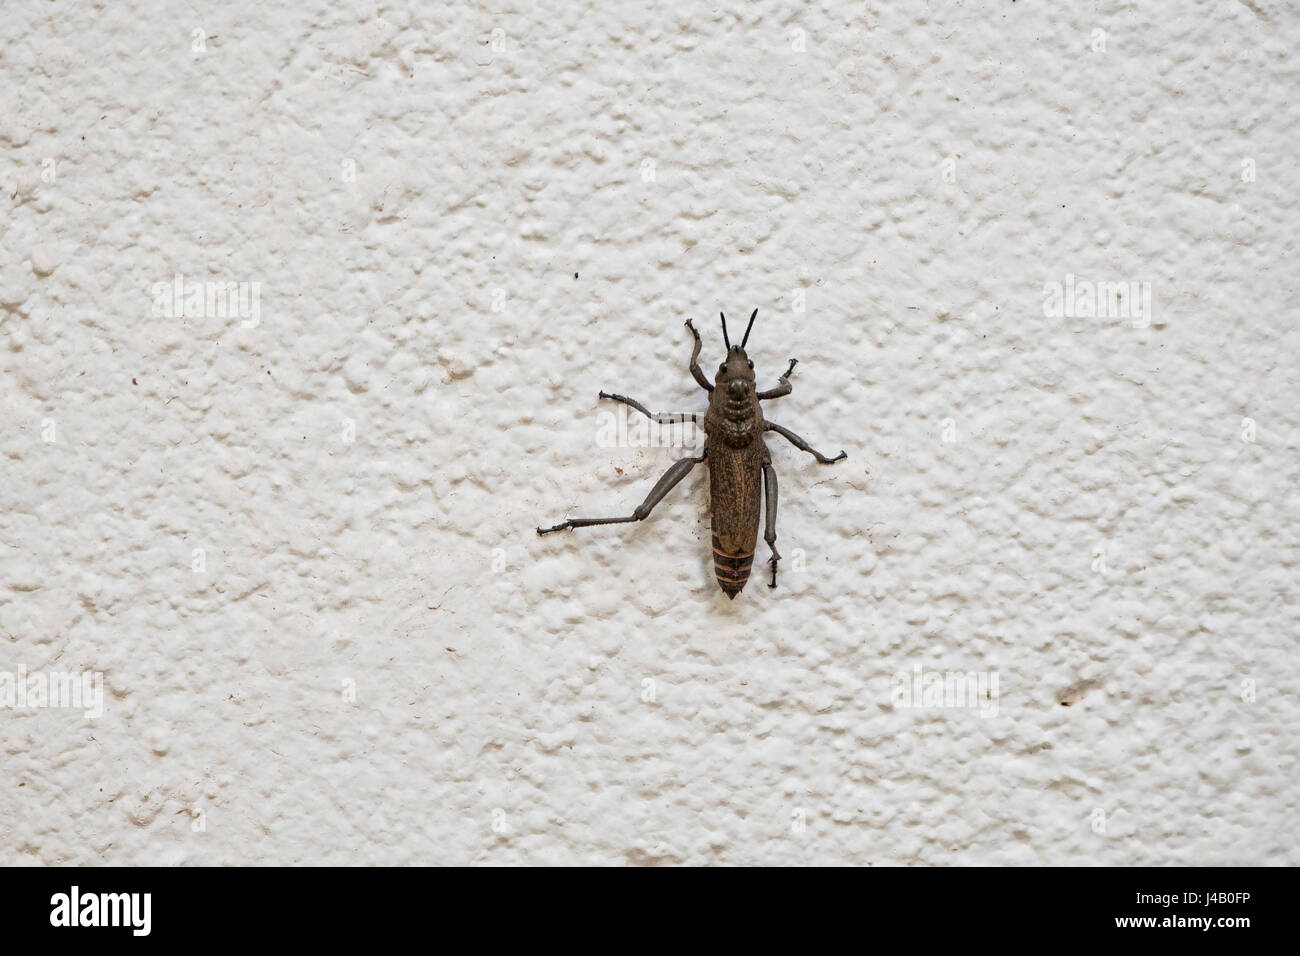 Dictyophorus griseus Grasshopper on a White Wall in Northern Tanzania ...